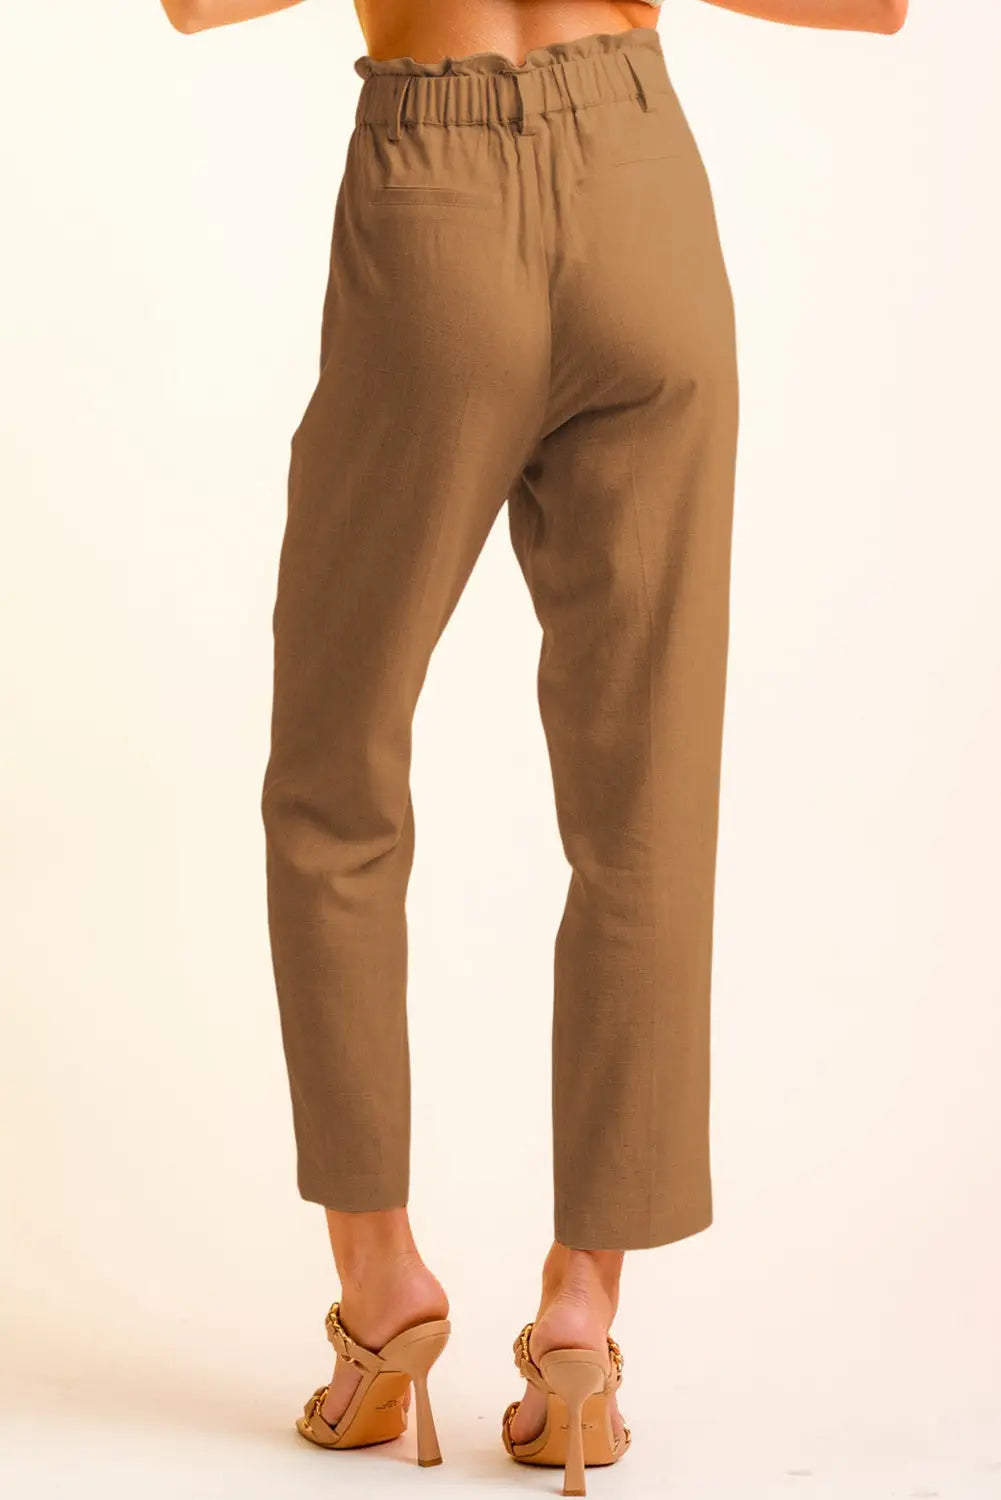 Brown button flap pocket high waisted linen pants - straight